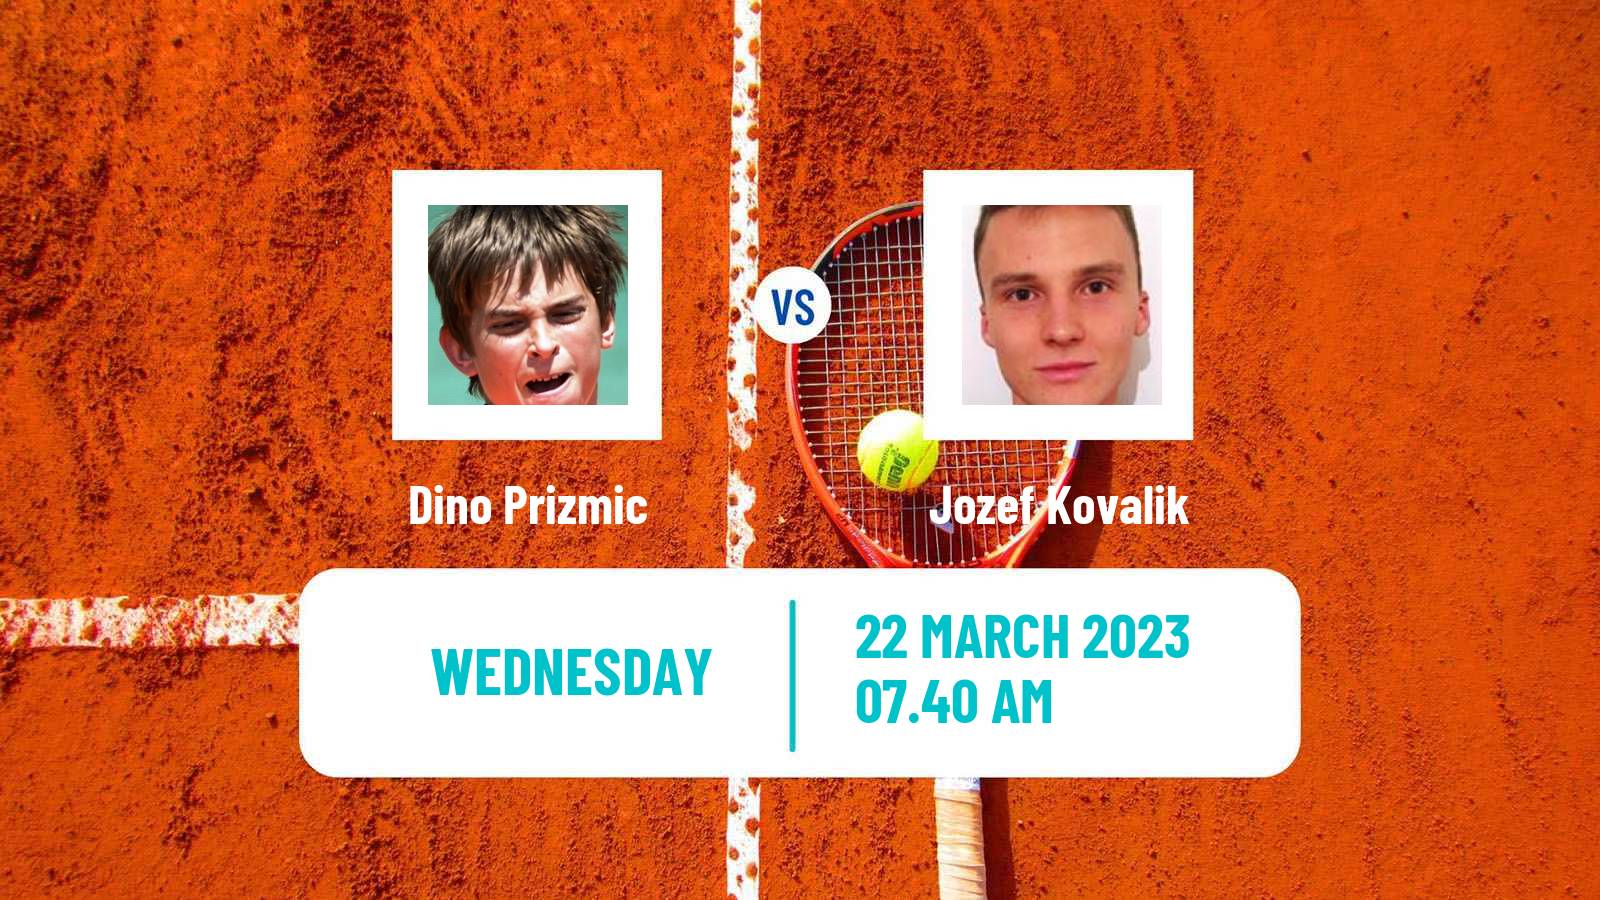 Tennis ATP Challenger Dino Prizmic - Jozef Kovalik